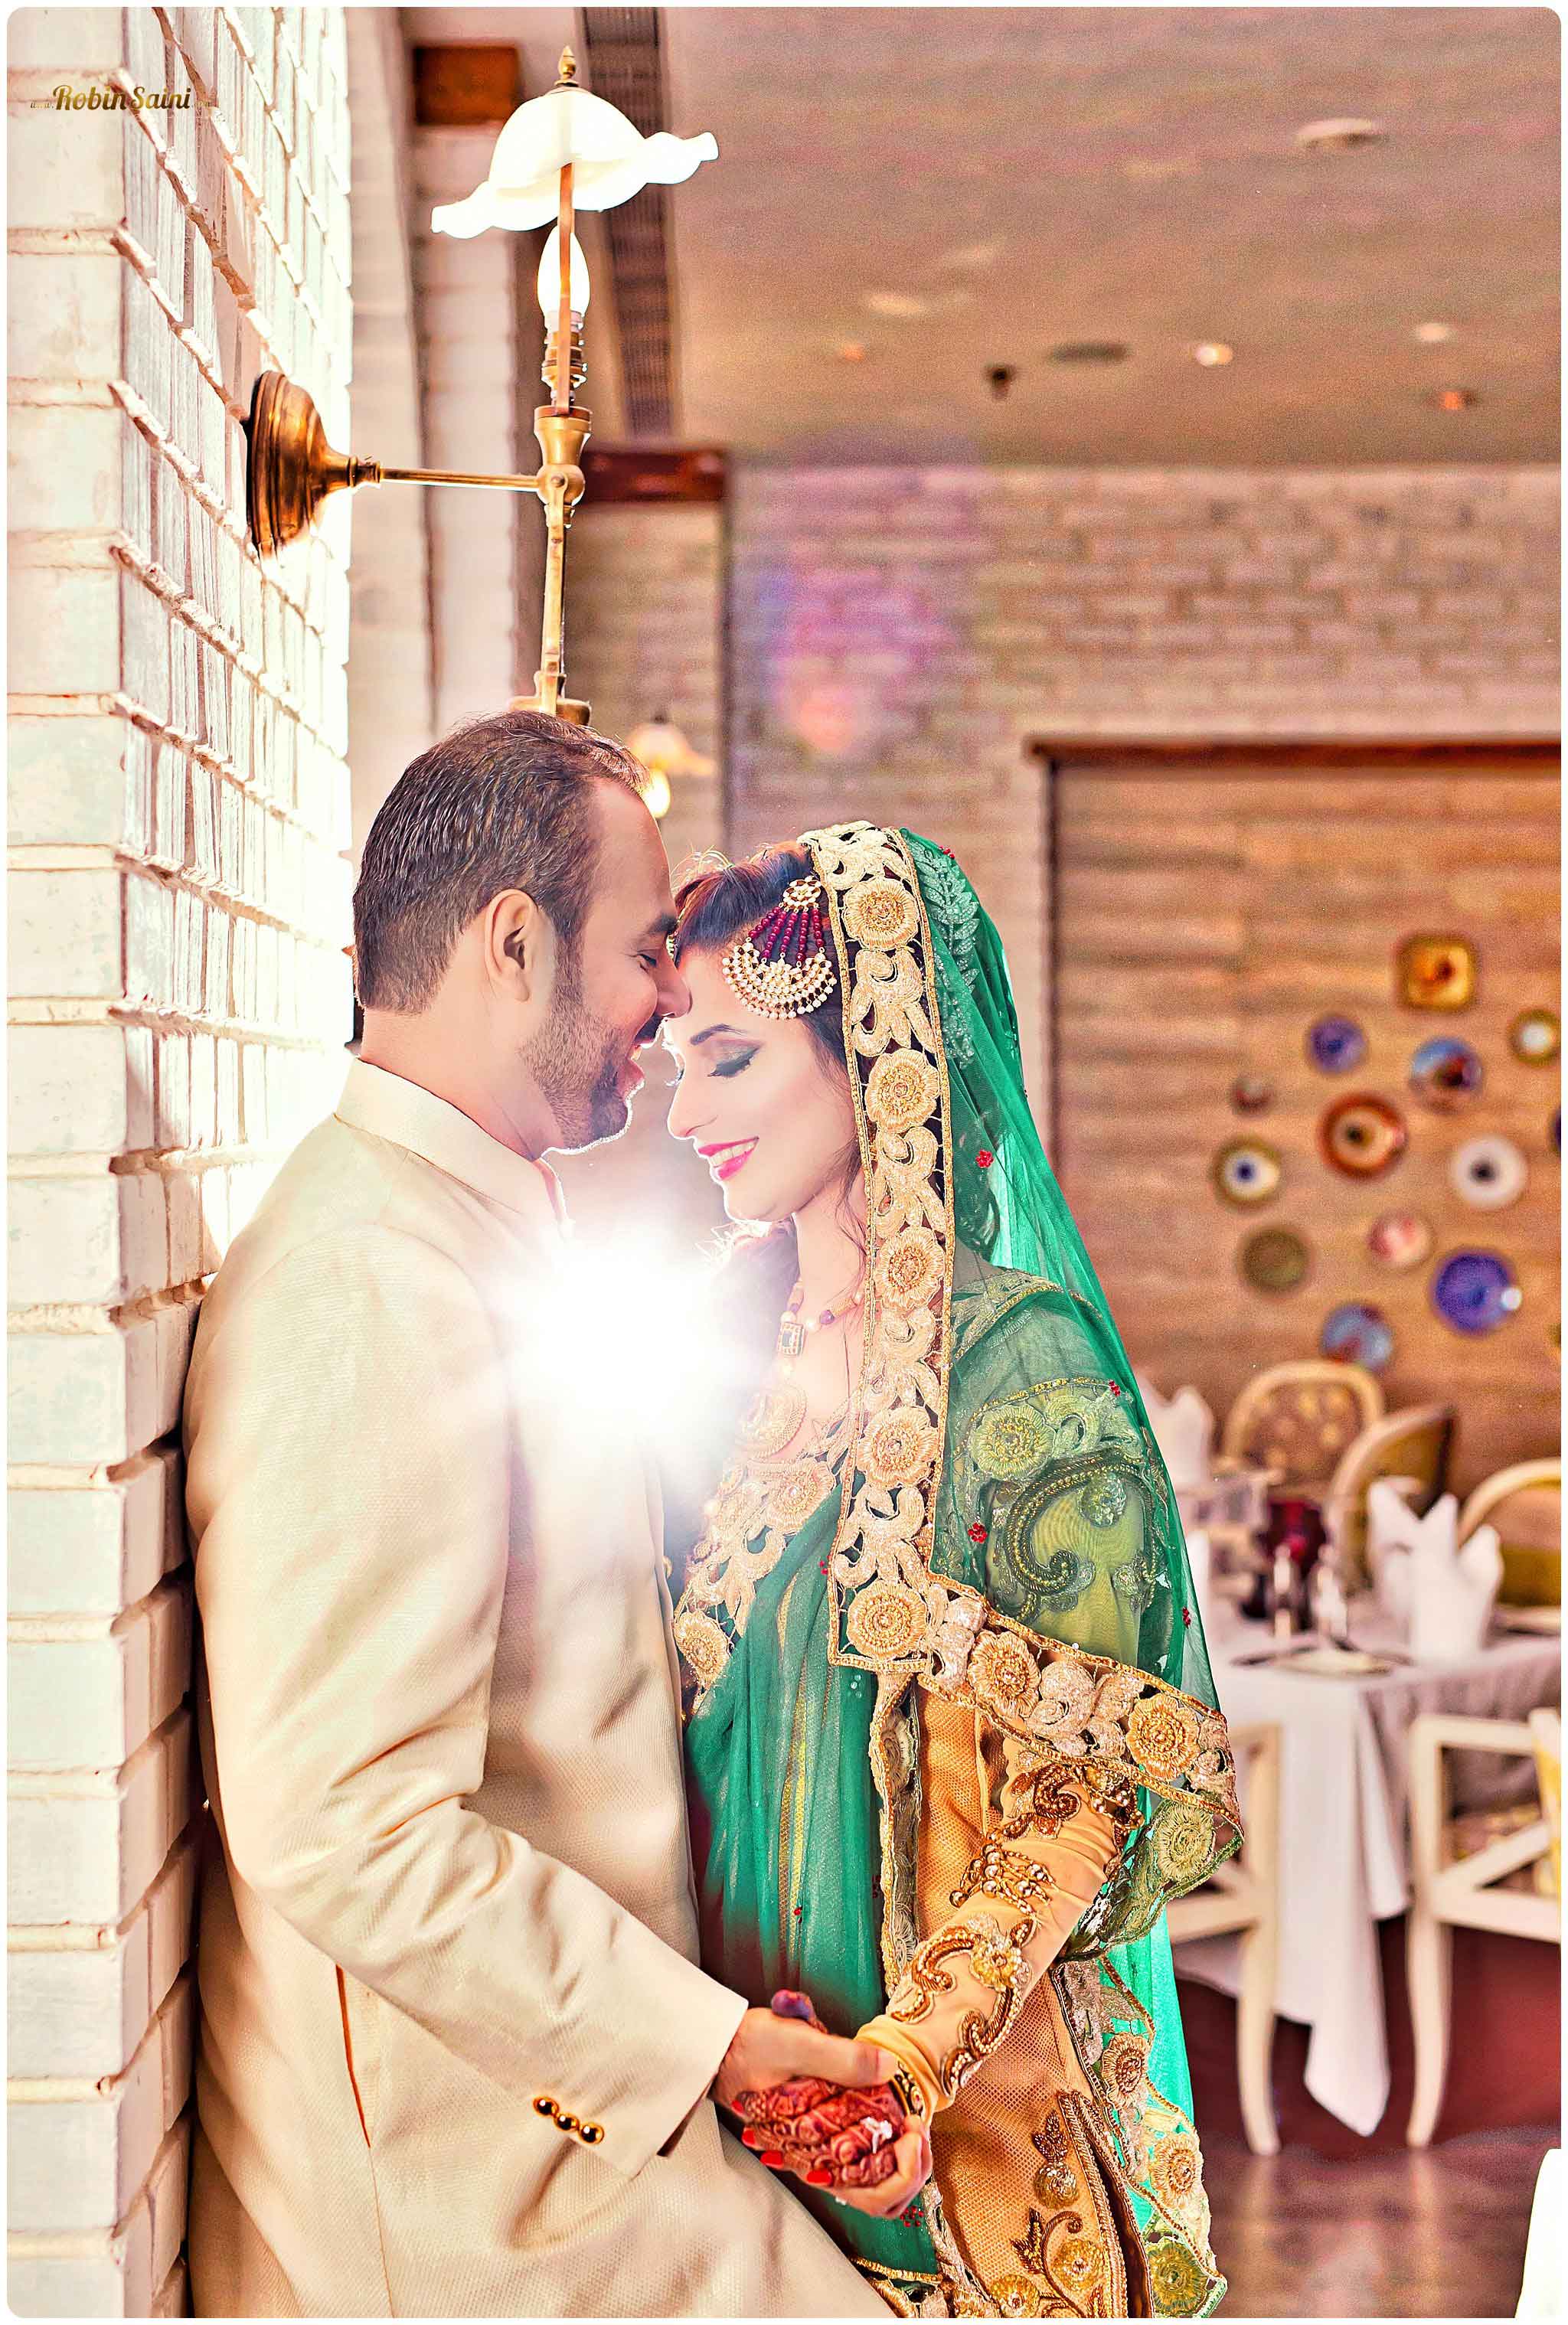 https://robinsaini.com/wp-content/uploads/2015/07/Muslim-bride-Nikkah-pictures-Muslim-wedding013.jpg